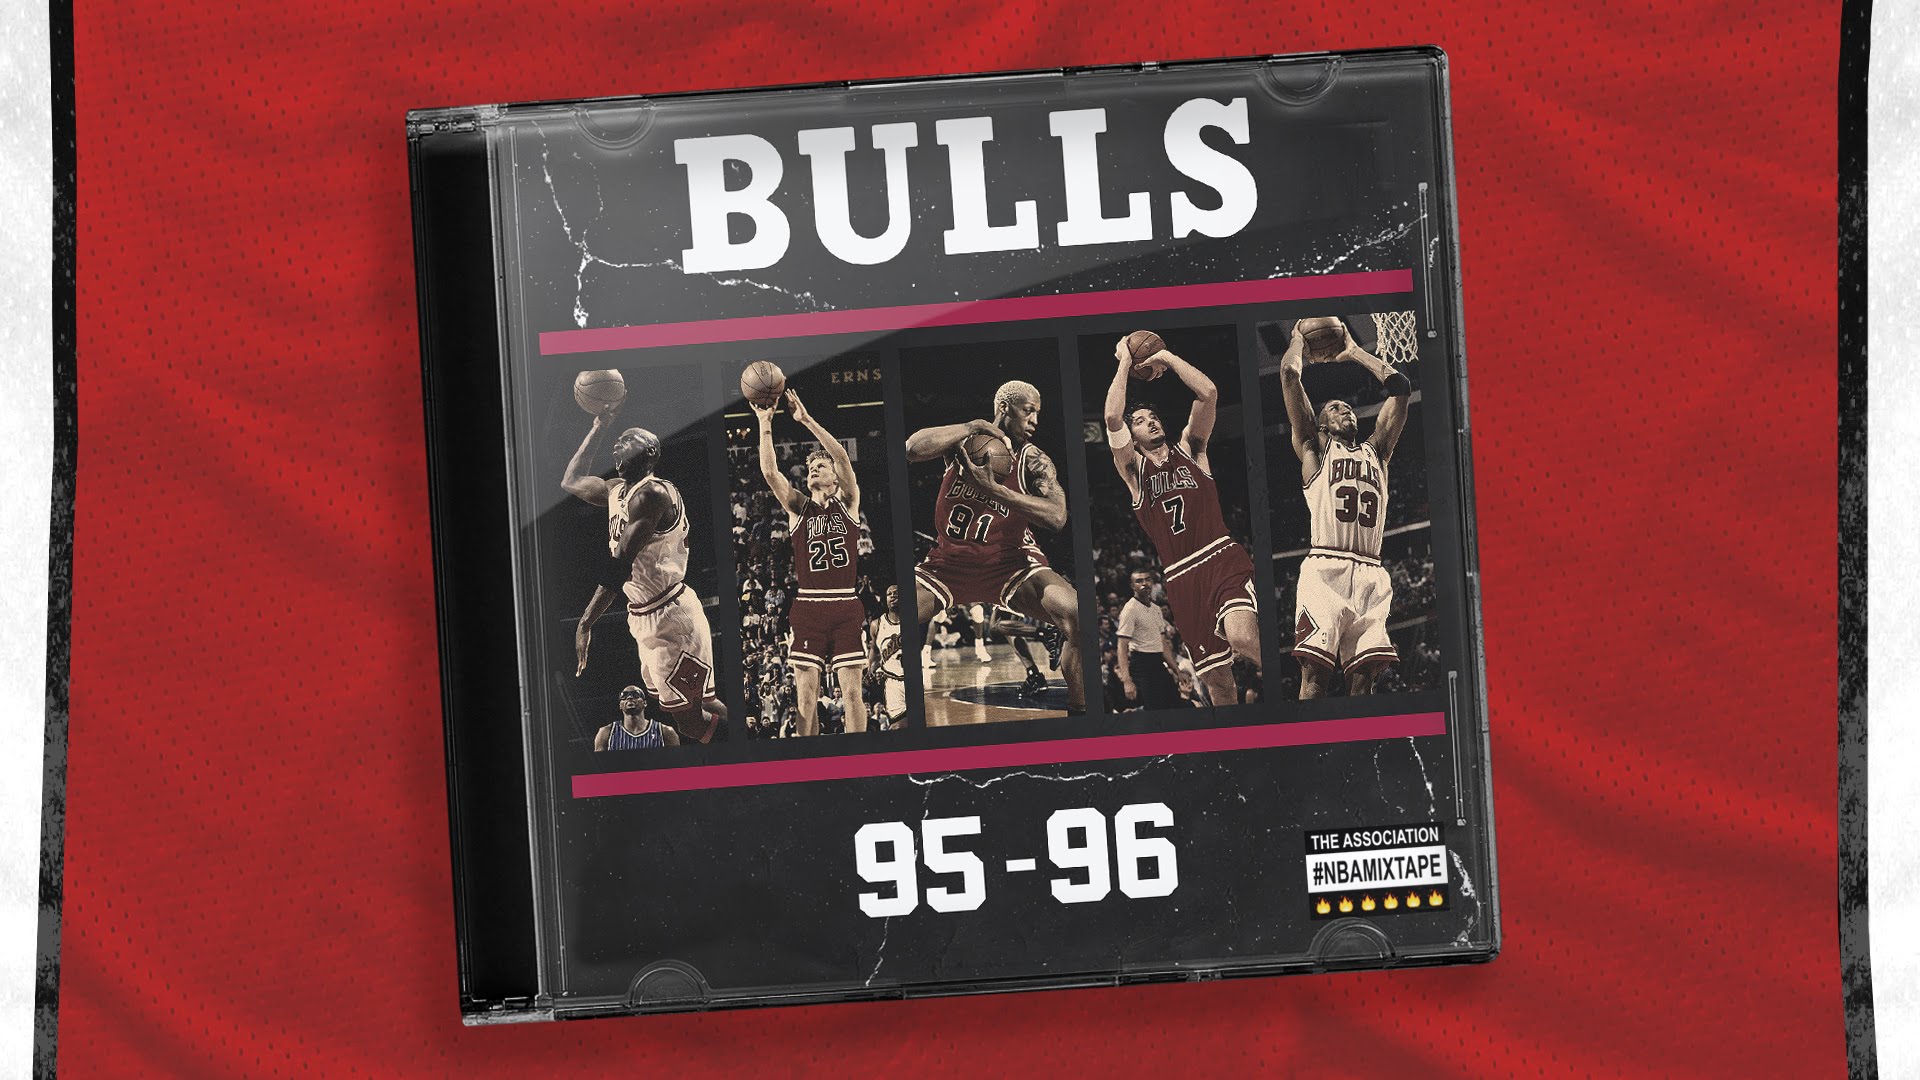 Highlight tape of the '95-'96 Chicago Bulls 72 win team